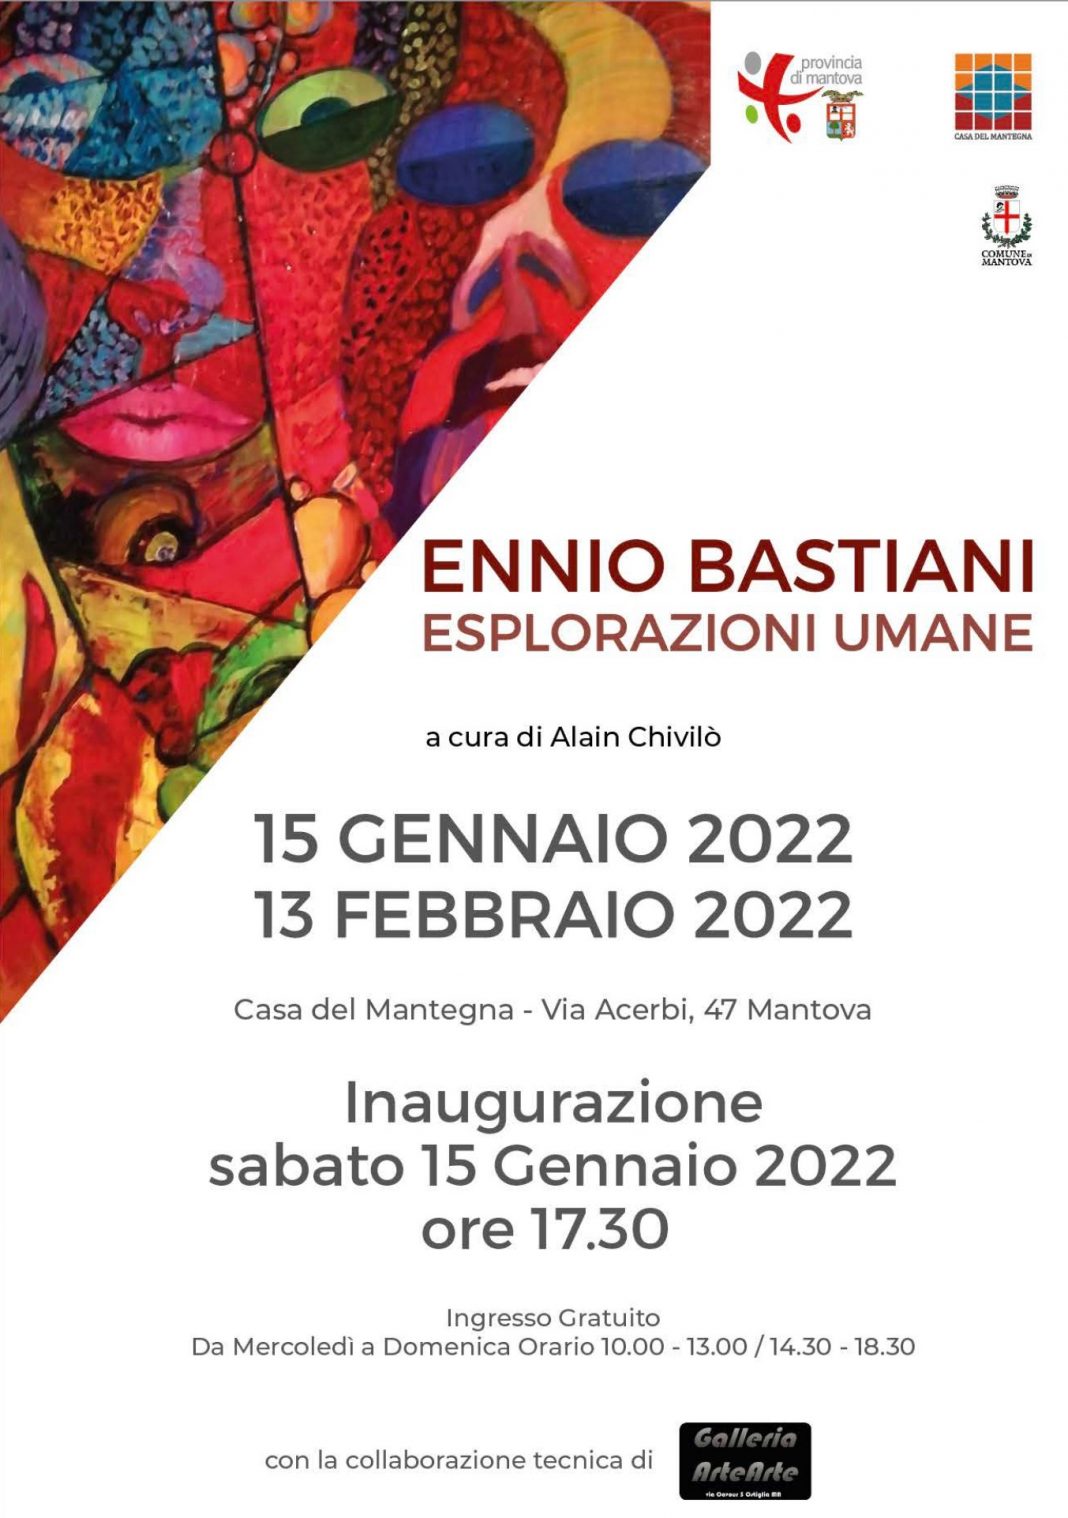 Ennio Bastiani – Esplorazioni Umanehttps://www.exibart.com/repository/media/formidable/11/img/4db/Locandina-Ennio-Bastiani-Esplorazioni-Umane-a-cura-di-Alain-Chivilò-1068x1518.jpg